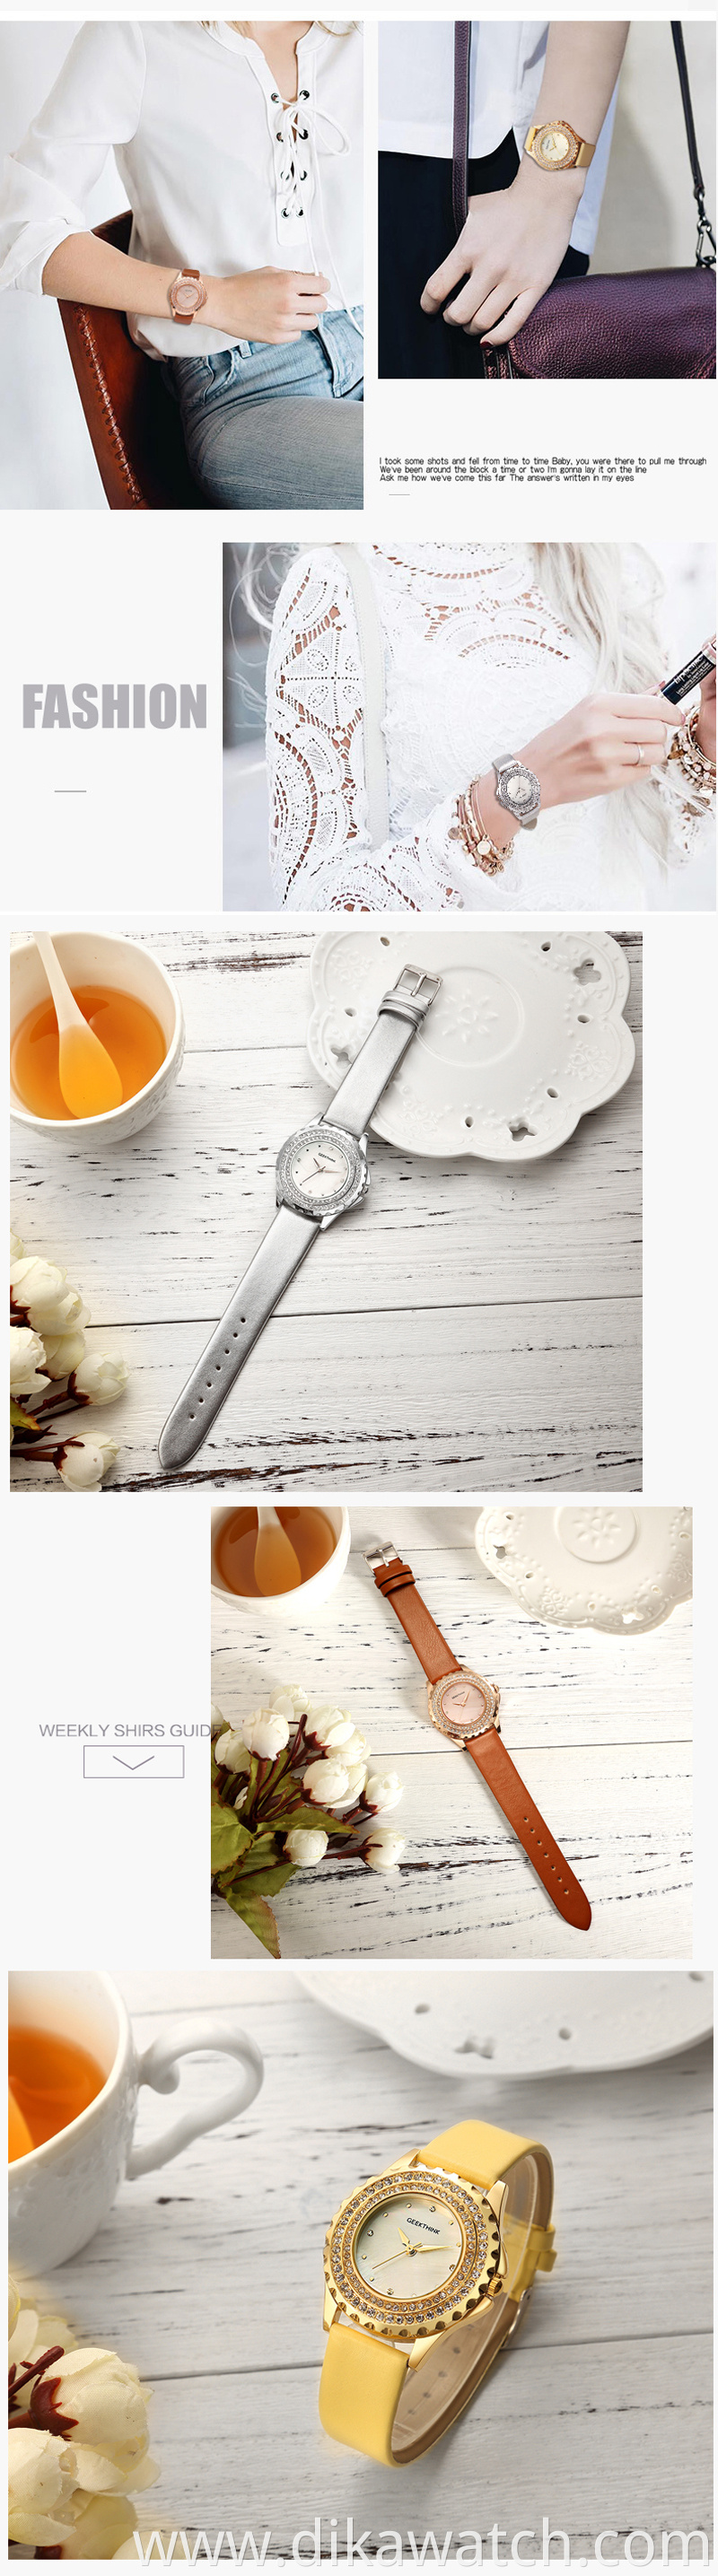 Geekthink 9011 Explosive Hot Selling Diamond Quartz Watch Leather Strap Leather Women Watch Wrist